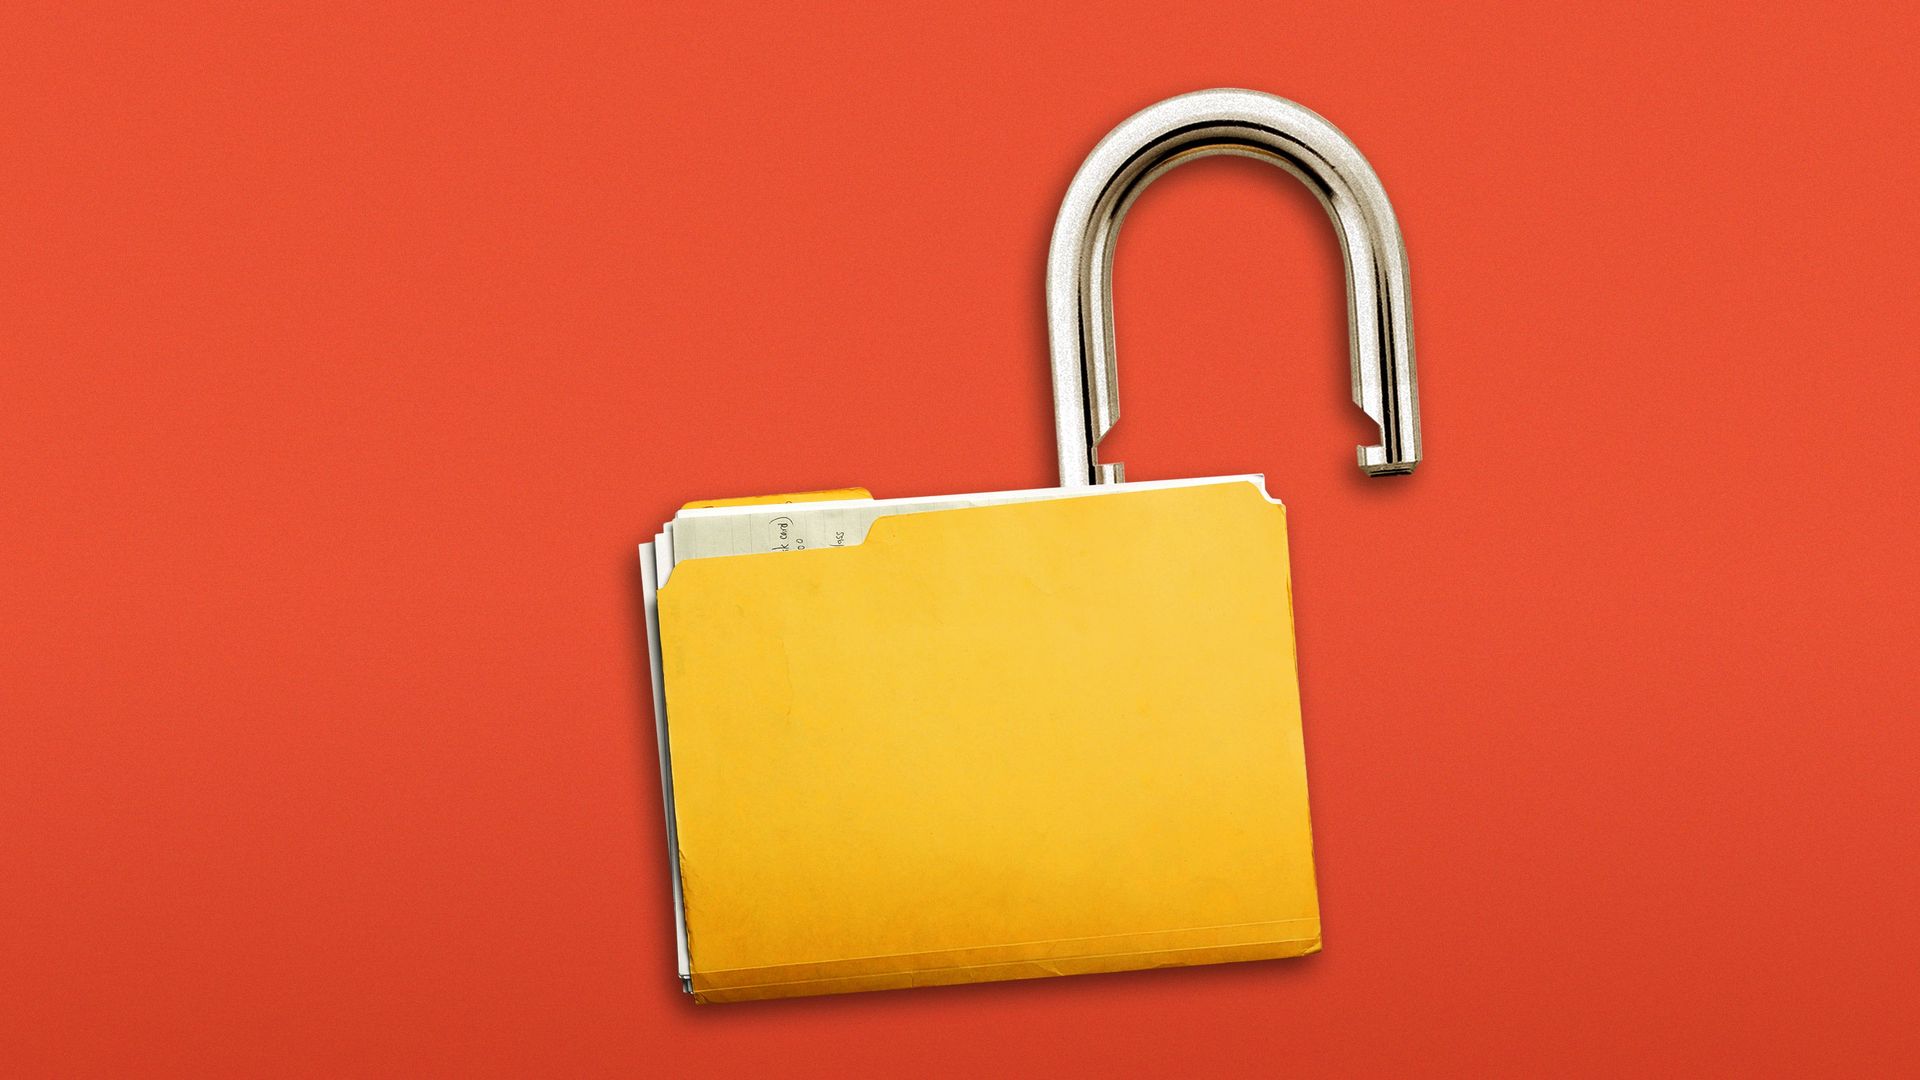 Illustration of an unlocked padlock made out of a manila folder.